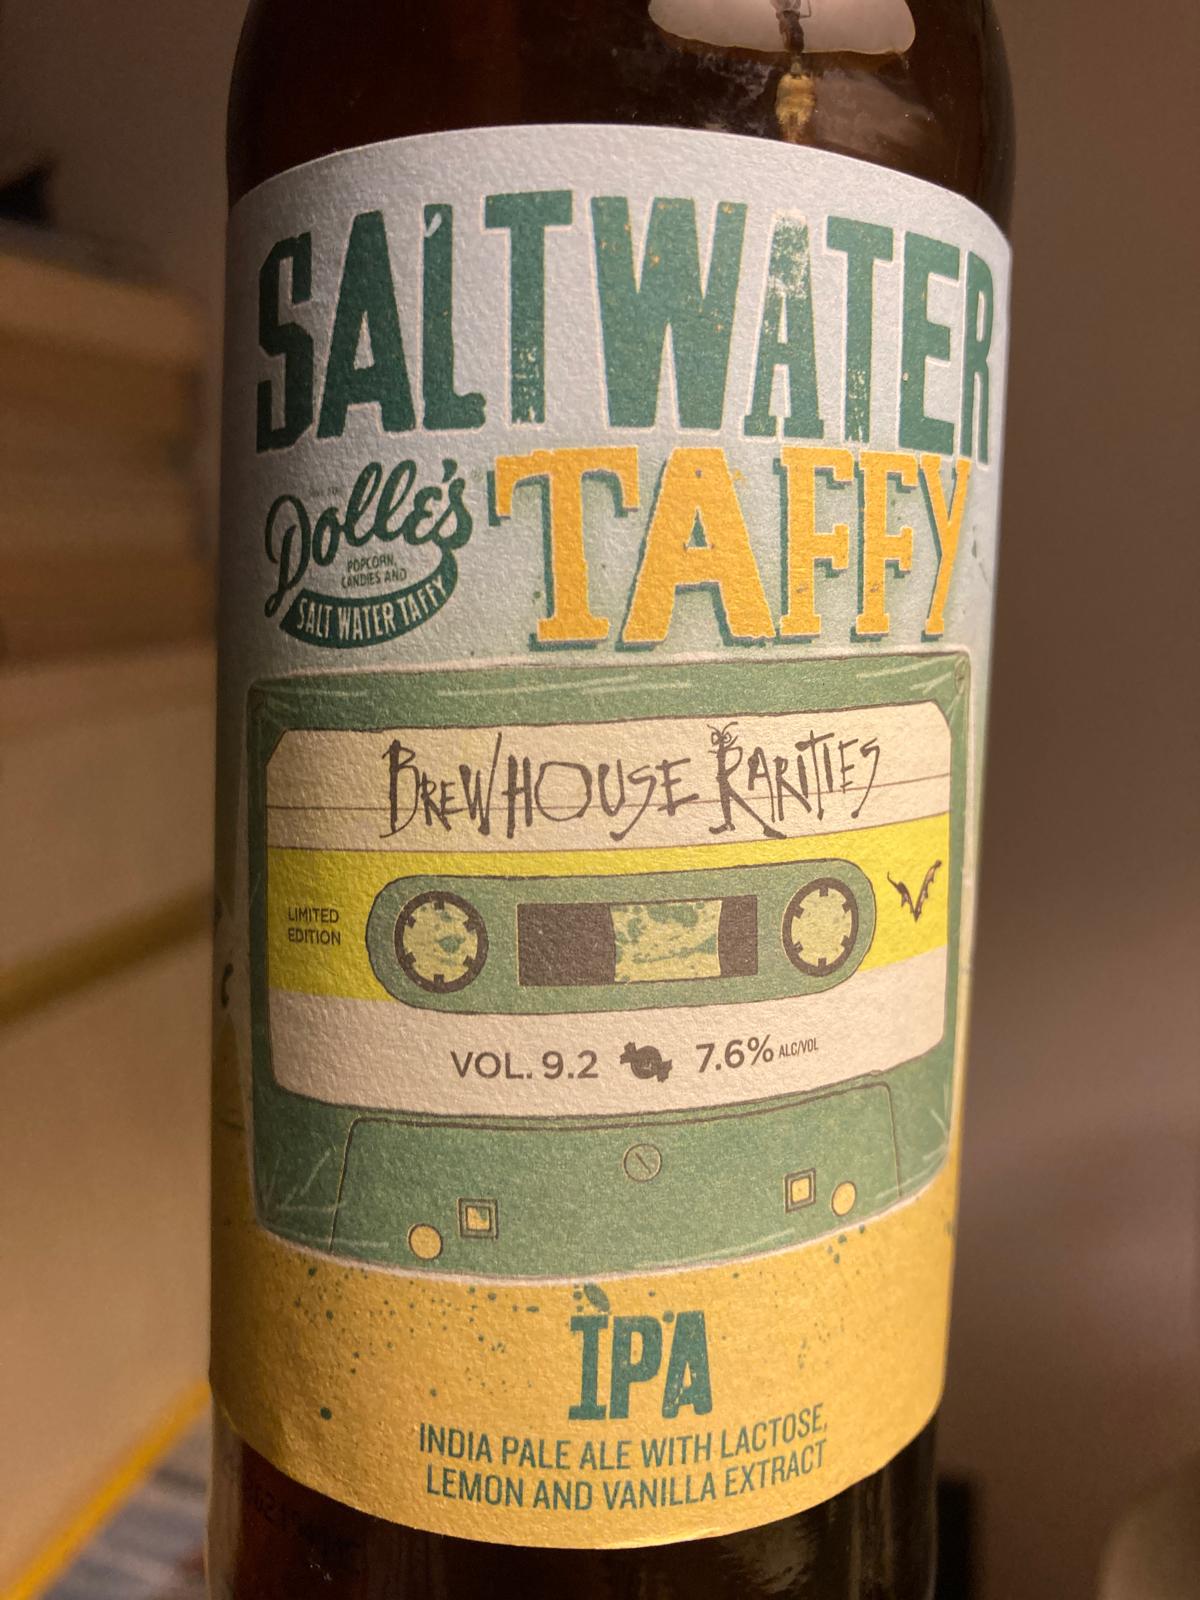 Brewhouse Rarities - Saltwater Taffy